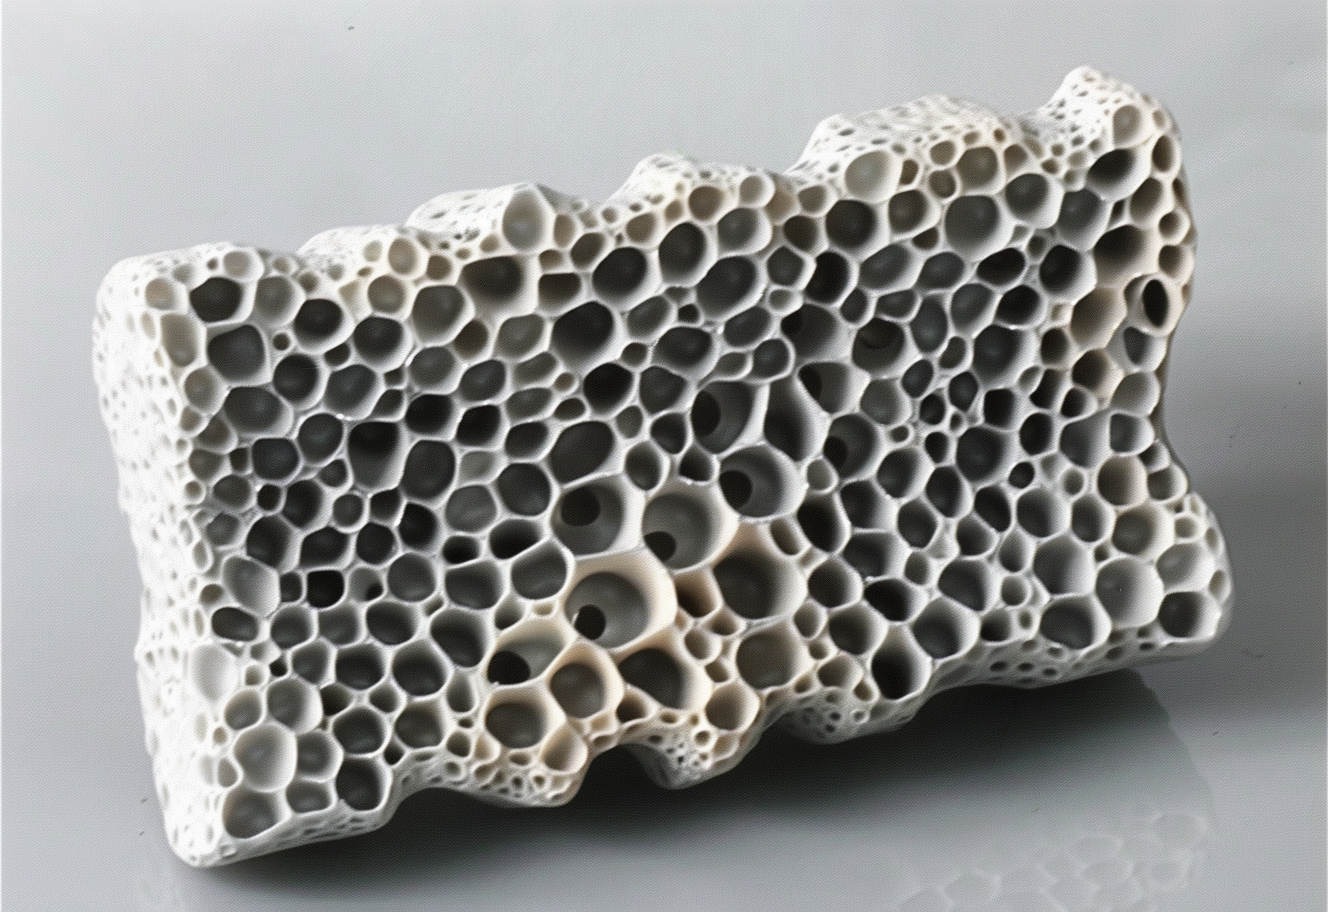 foam-ceramics-manufacturing-processes-a-comprehensive-overview-of-six-methods